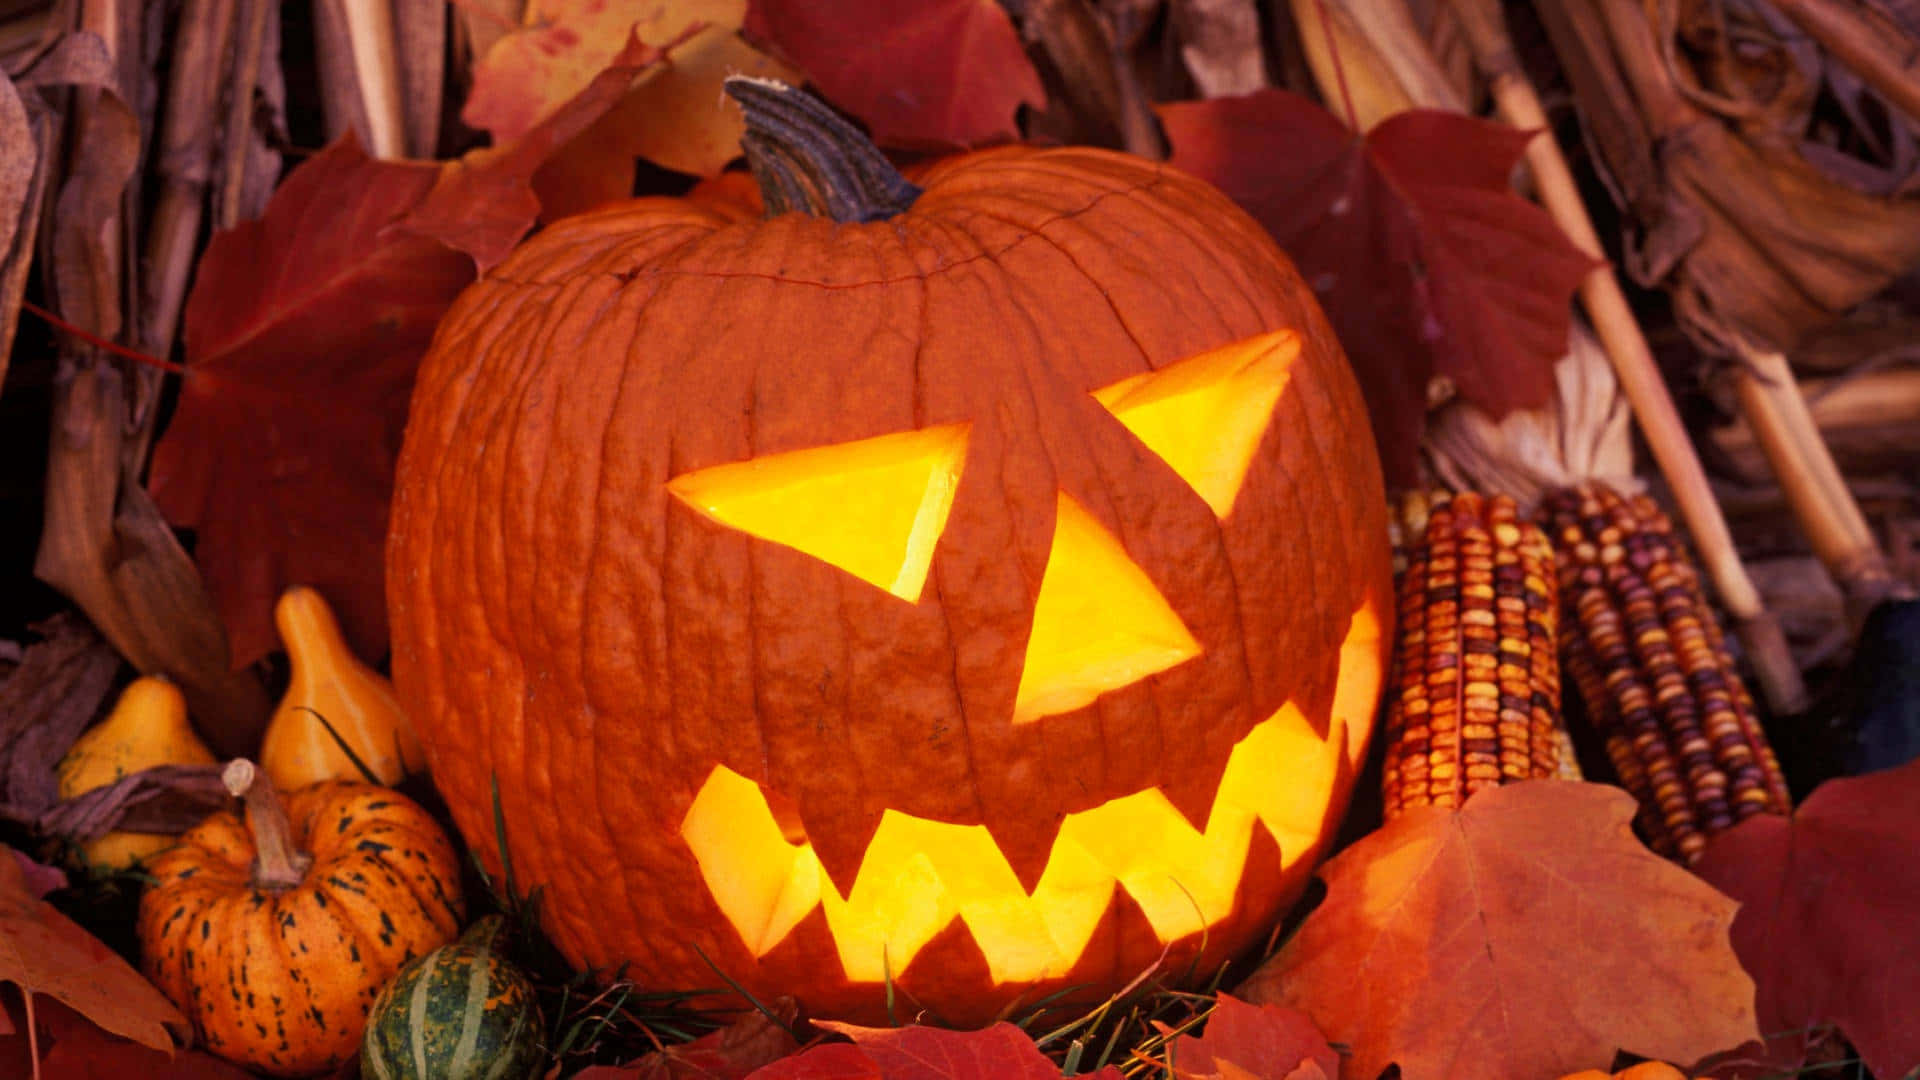 Have a spooktacular Halloween!